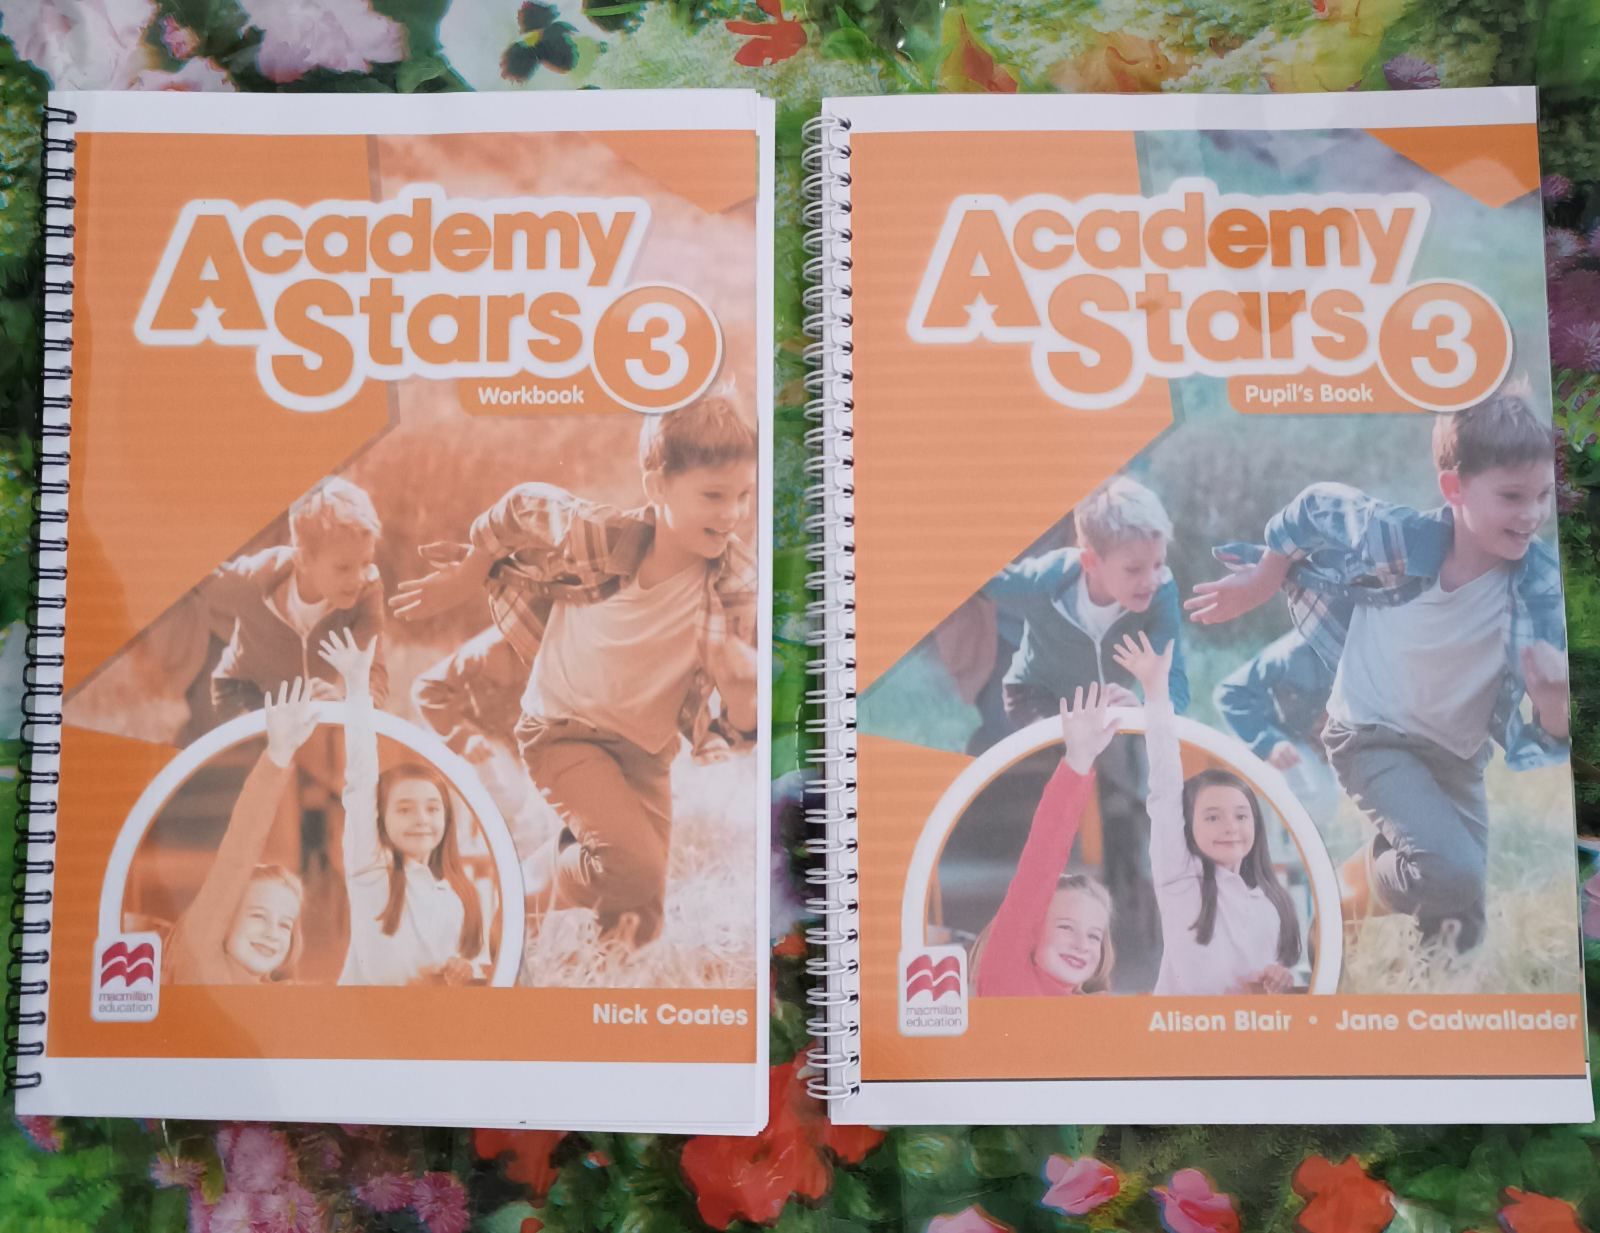 Academy stars 3 pupil's book + workbook.